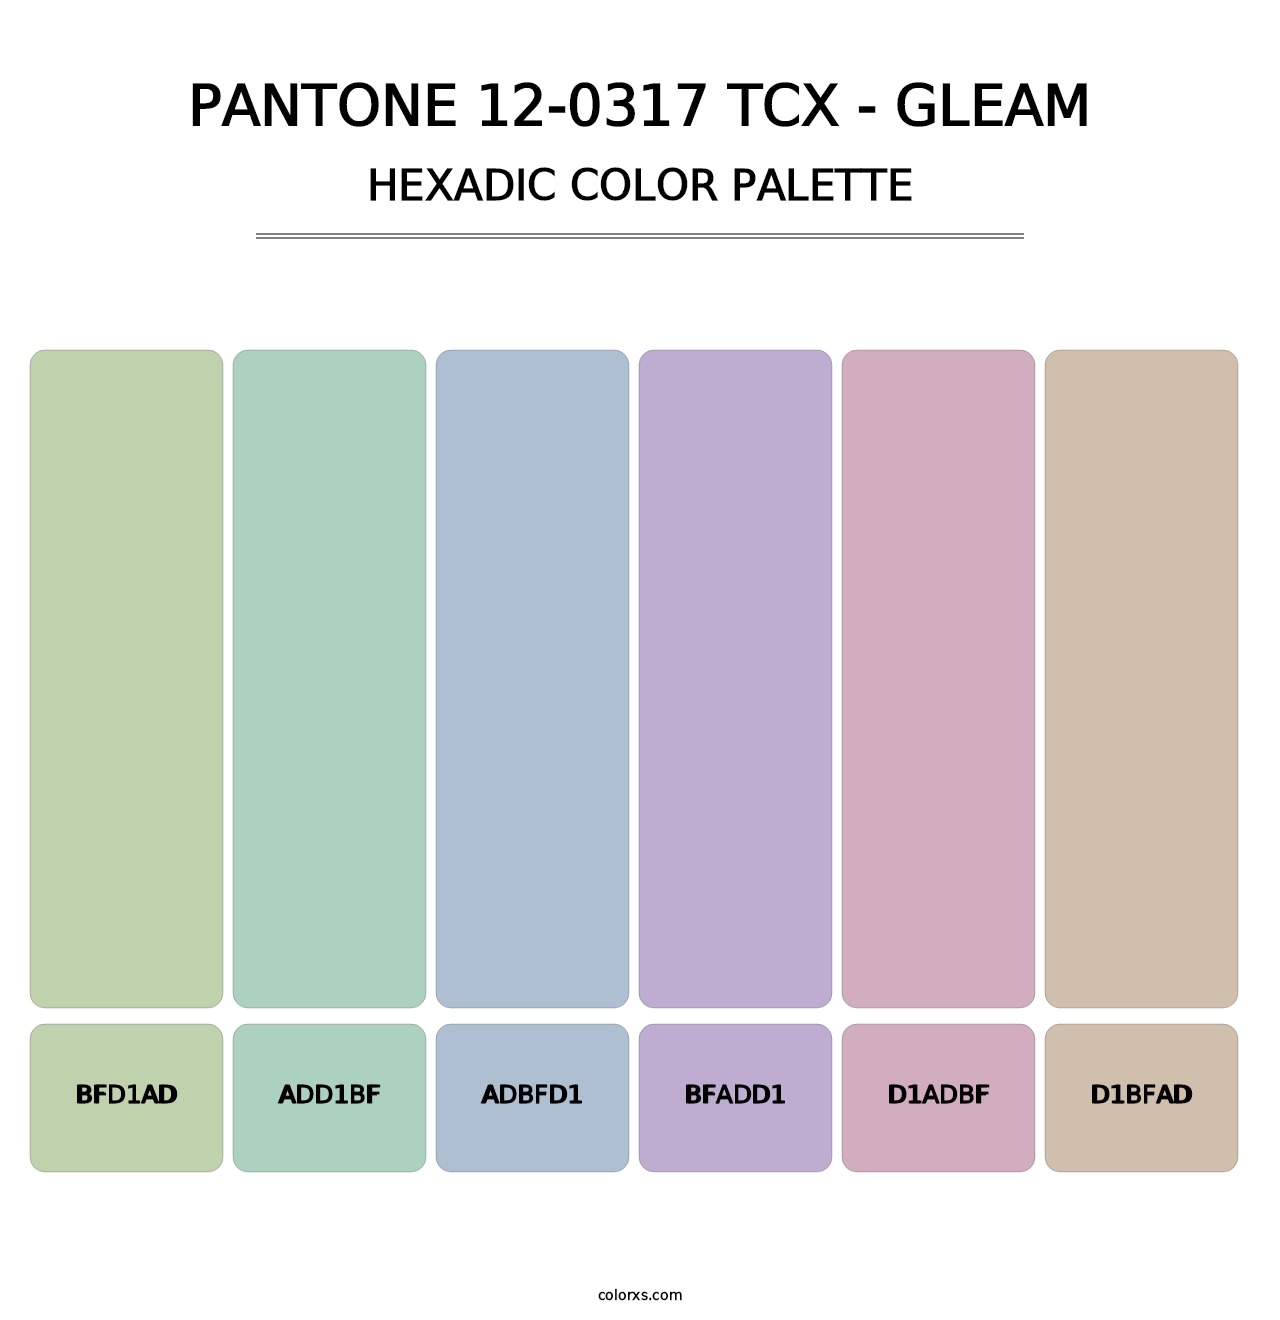 PANTONE 12-0317 TCX - Gleam - Hexadic Color Palette